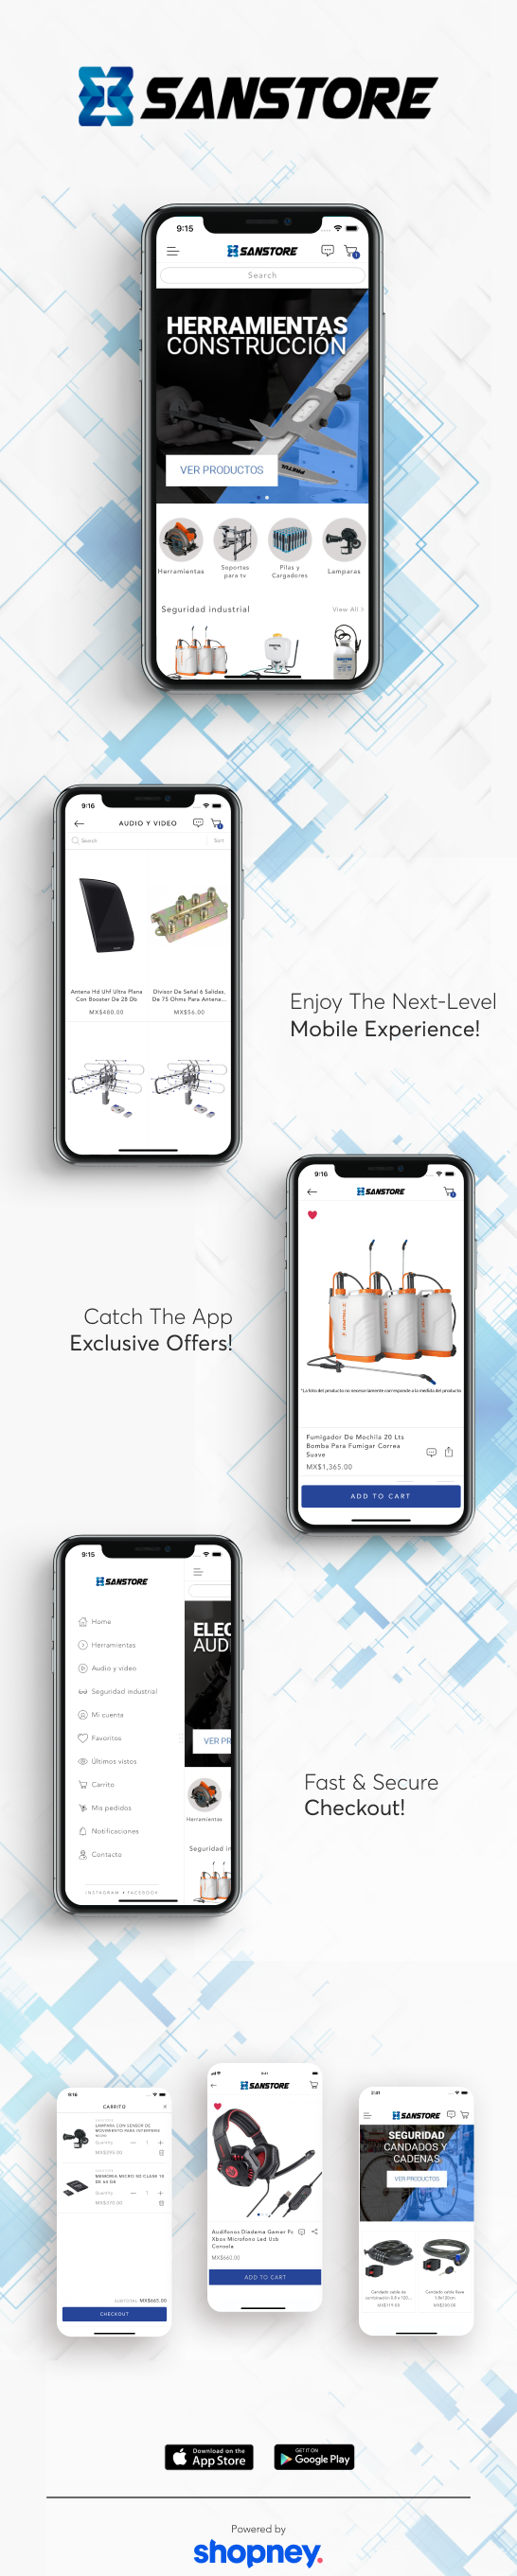 the mobile app design of Sanstore app